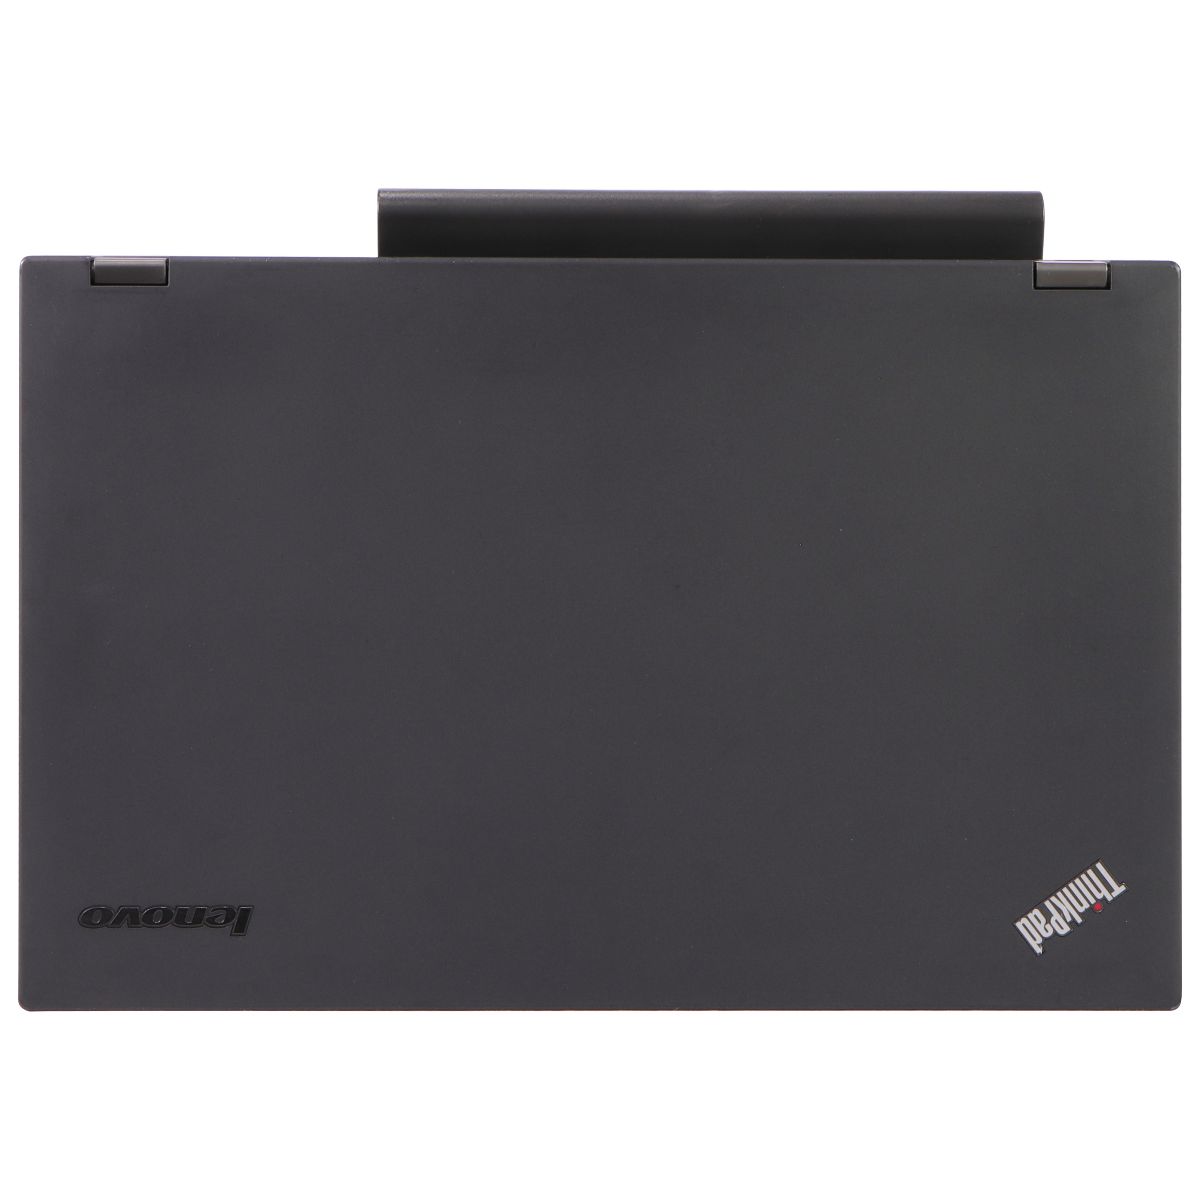 Lenovo ThinkPad W540 15.6-in FHD Laptop i7-4800MQ/256GB SSD/16GB/10 Home Laptops - PC Laptops & Netbooks Lenovo    - Simple Cell Bulk Wholesale Pricing - USA Seller